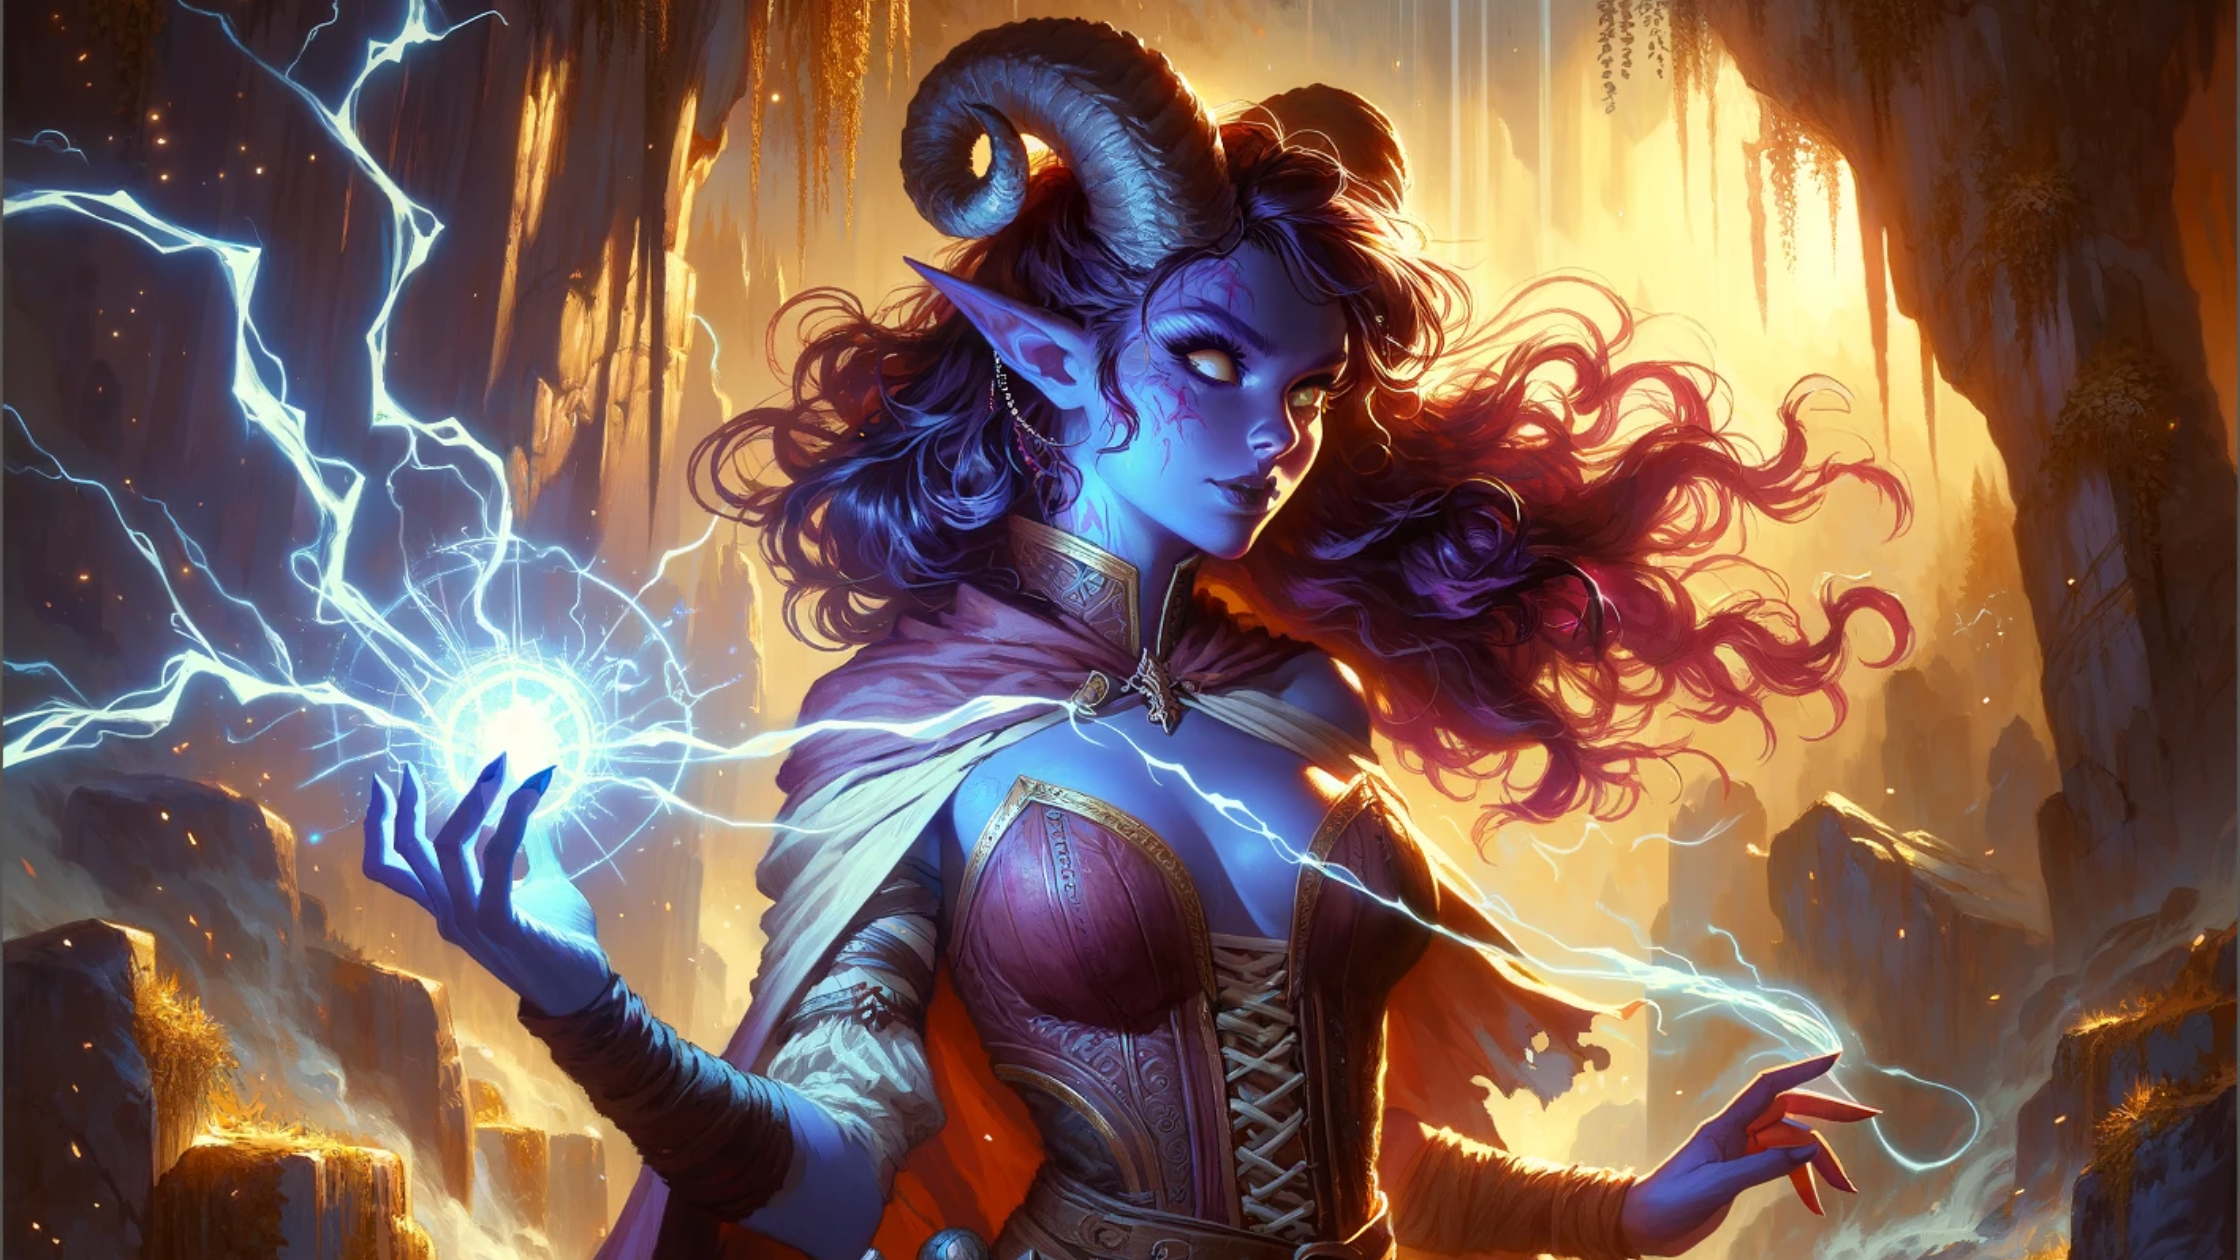 A beautiful tiefling sorceress from DnD casting a lightning spell.